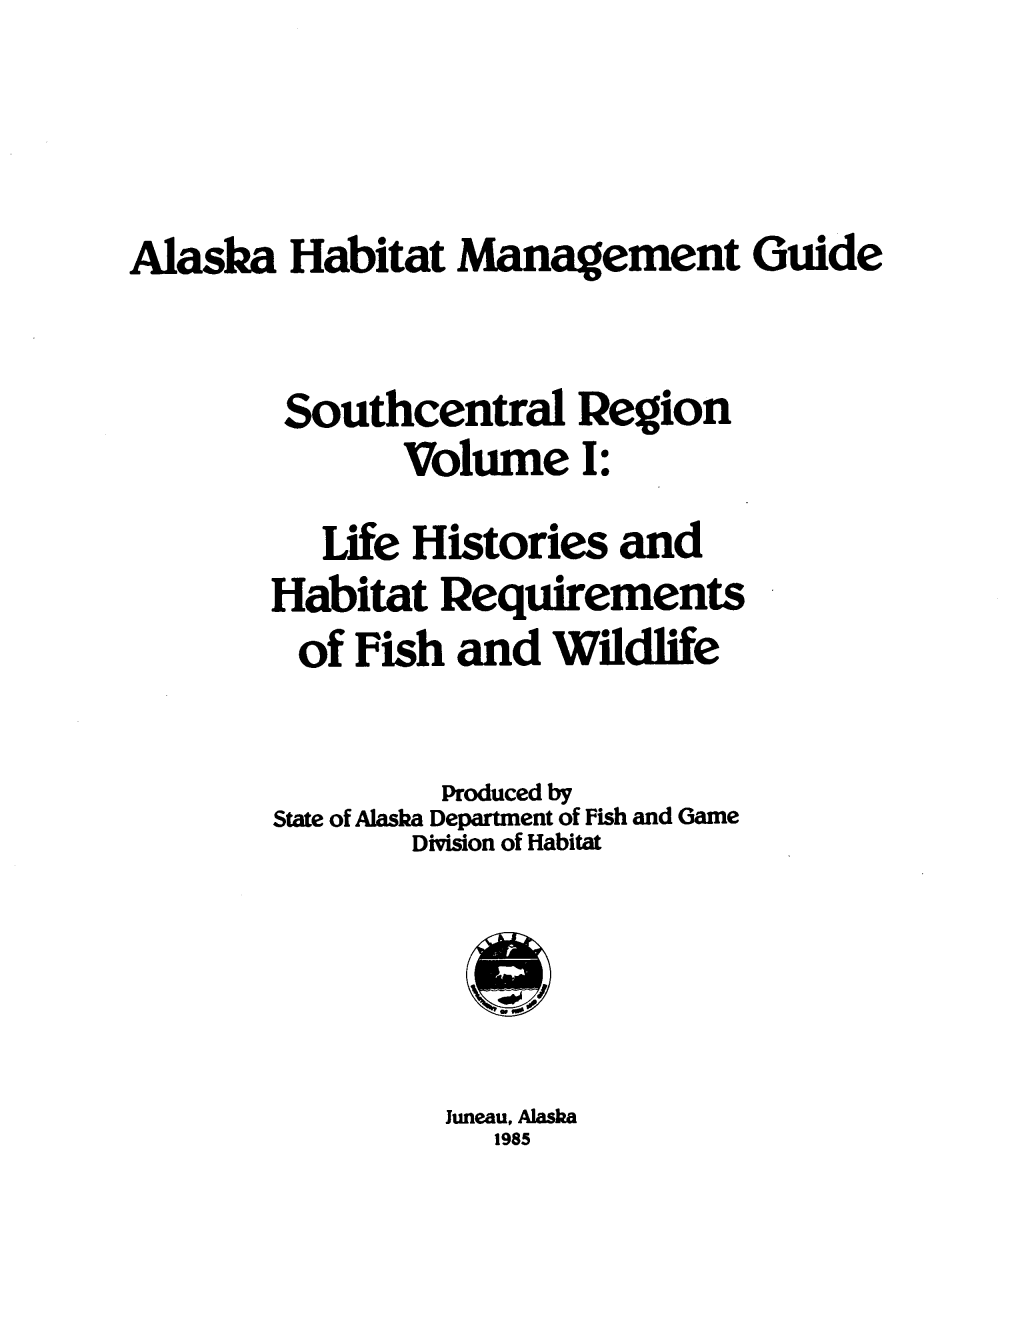 Alaska Habitat Management Guide. Southcentral Region. Volume 1